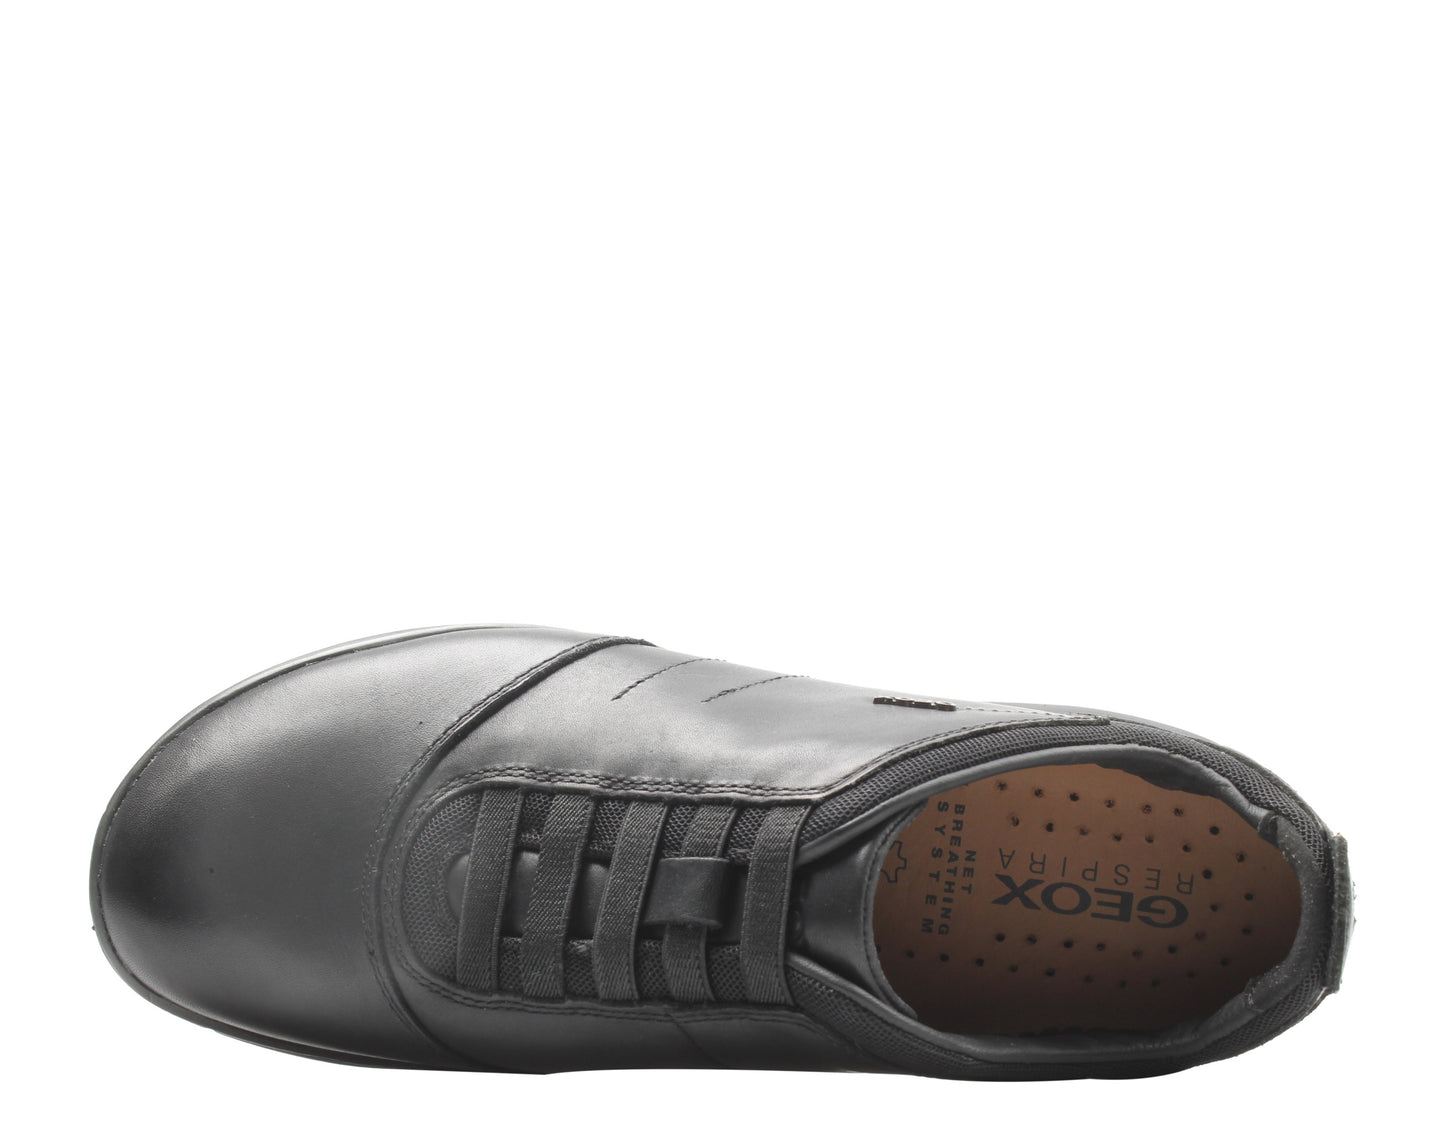 Geox Nebula Slip-On Black Leather Men's Casual Sneakers U52D7B-00046-C9999